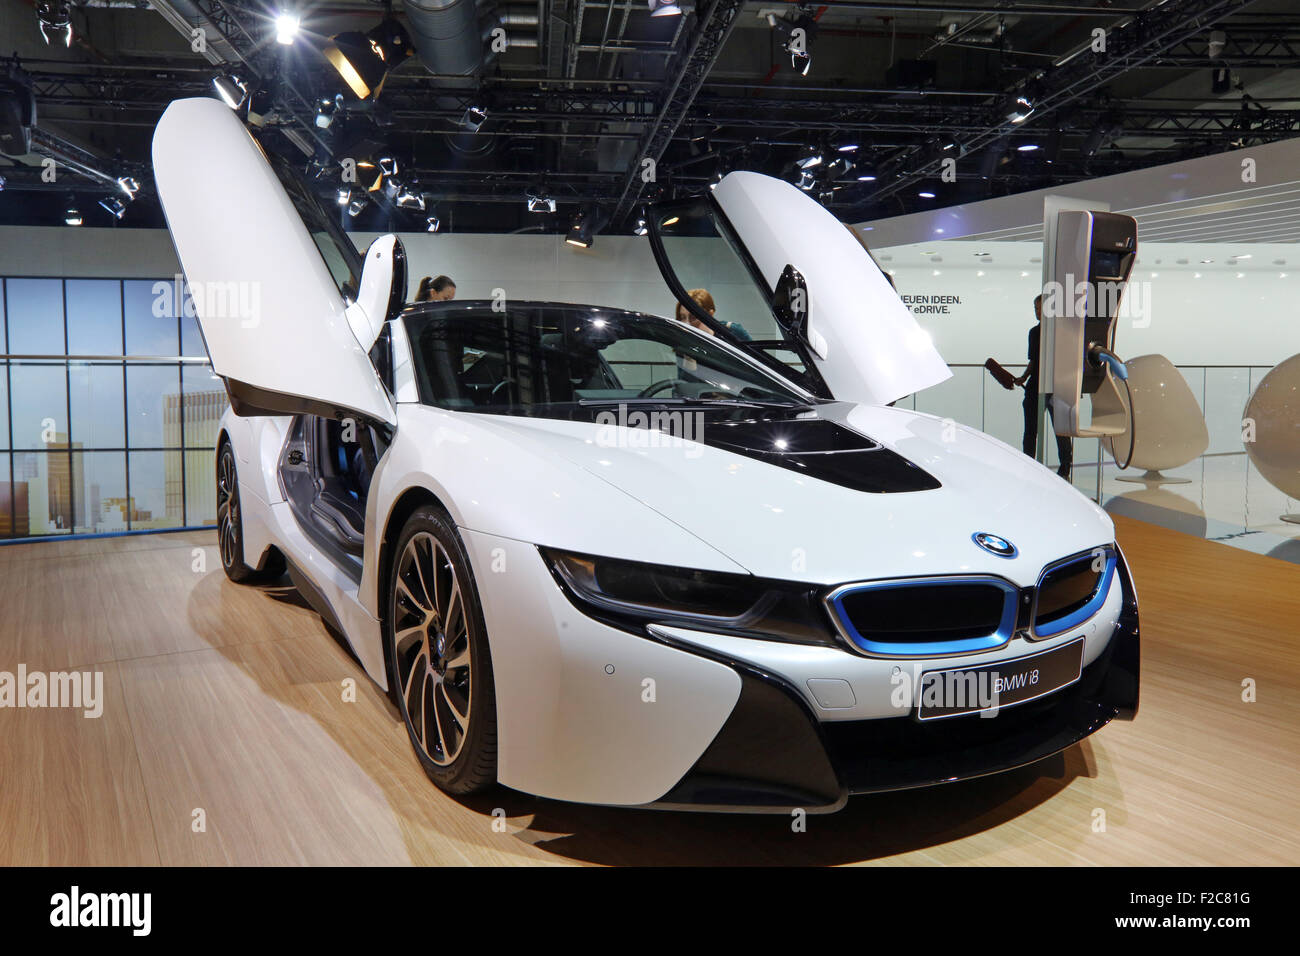 Frankfurt/M, 16.09.2015 - Hybrid concept car BMW i8 al stand BMW al sessantesimo International Motor Show IAA 2015 (Internationale Automobil Ausstellung, IAA) di Francoforte sul Meno, Germania Foto Stock